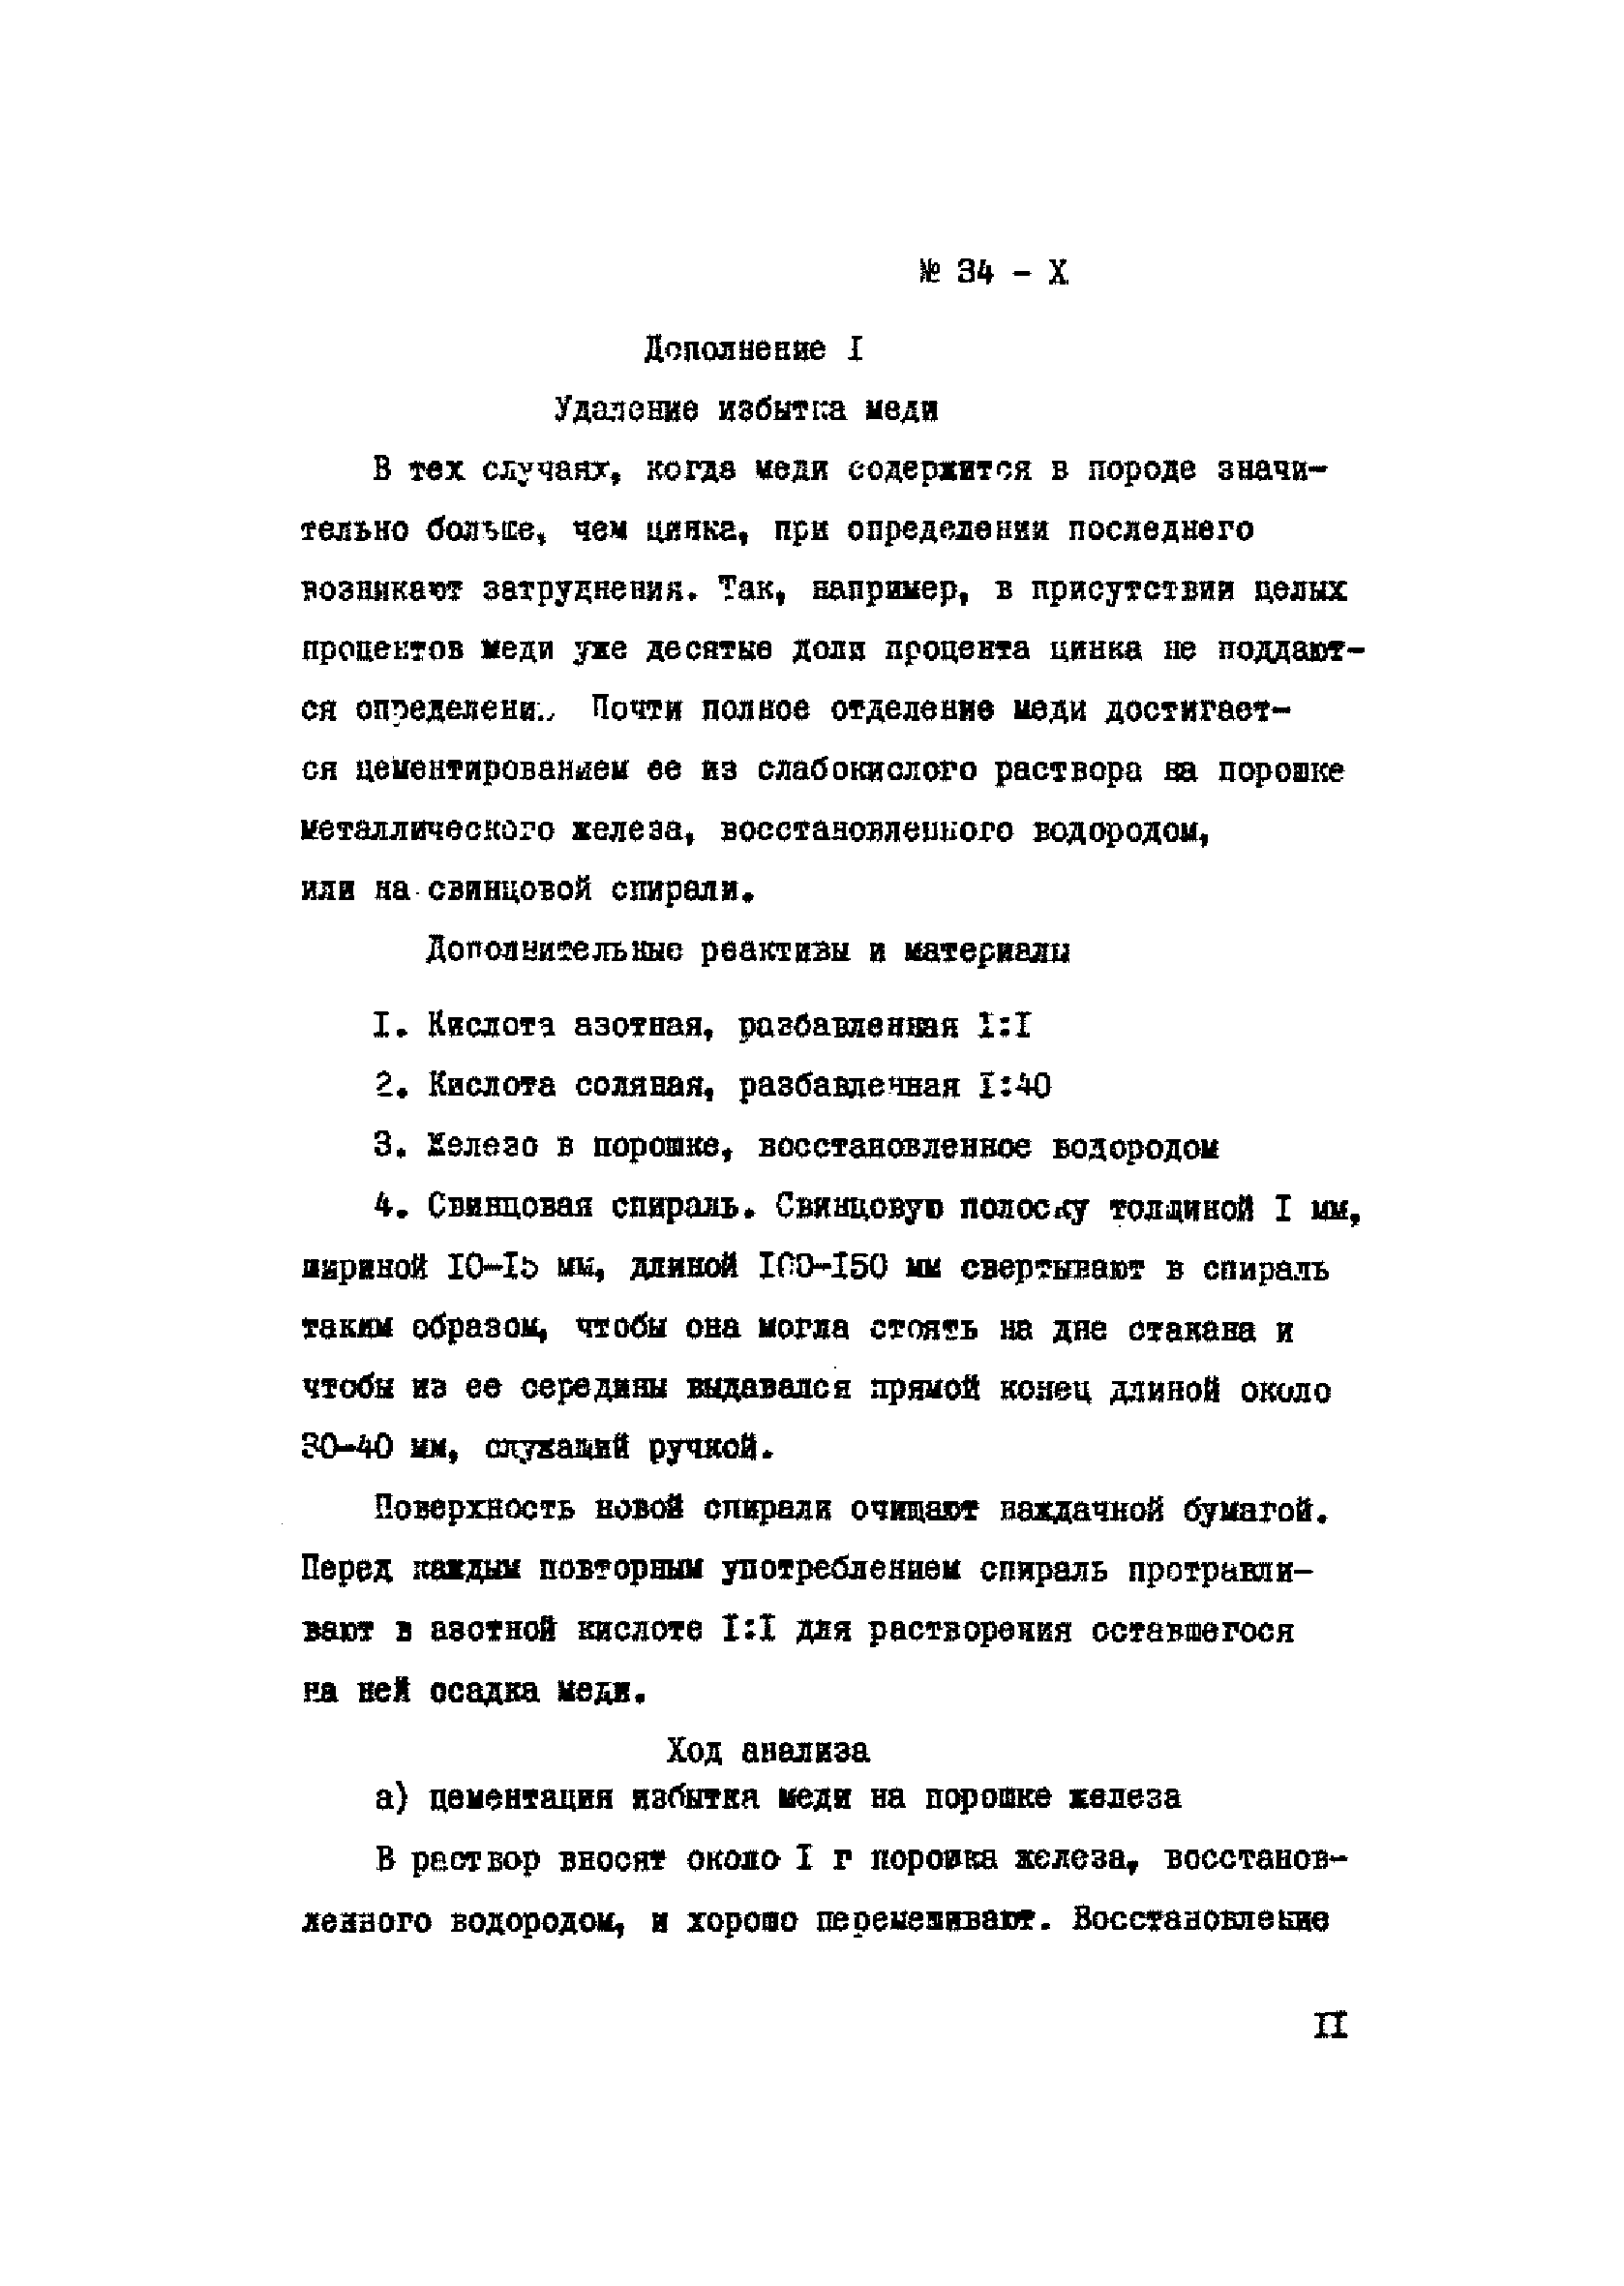 Инструкция НСАМ 34-Х